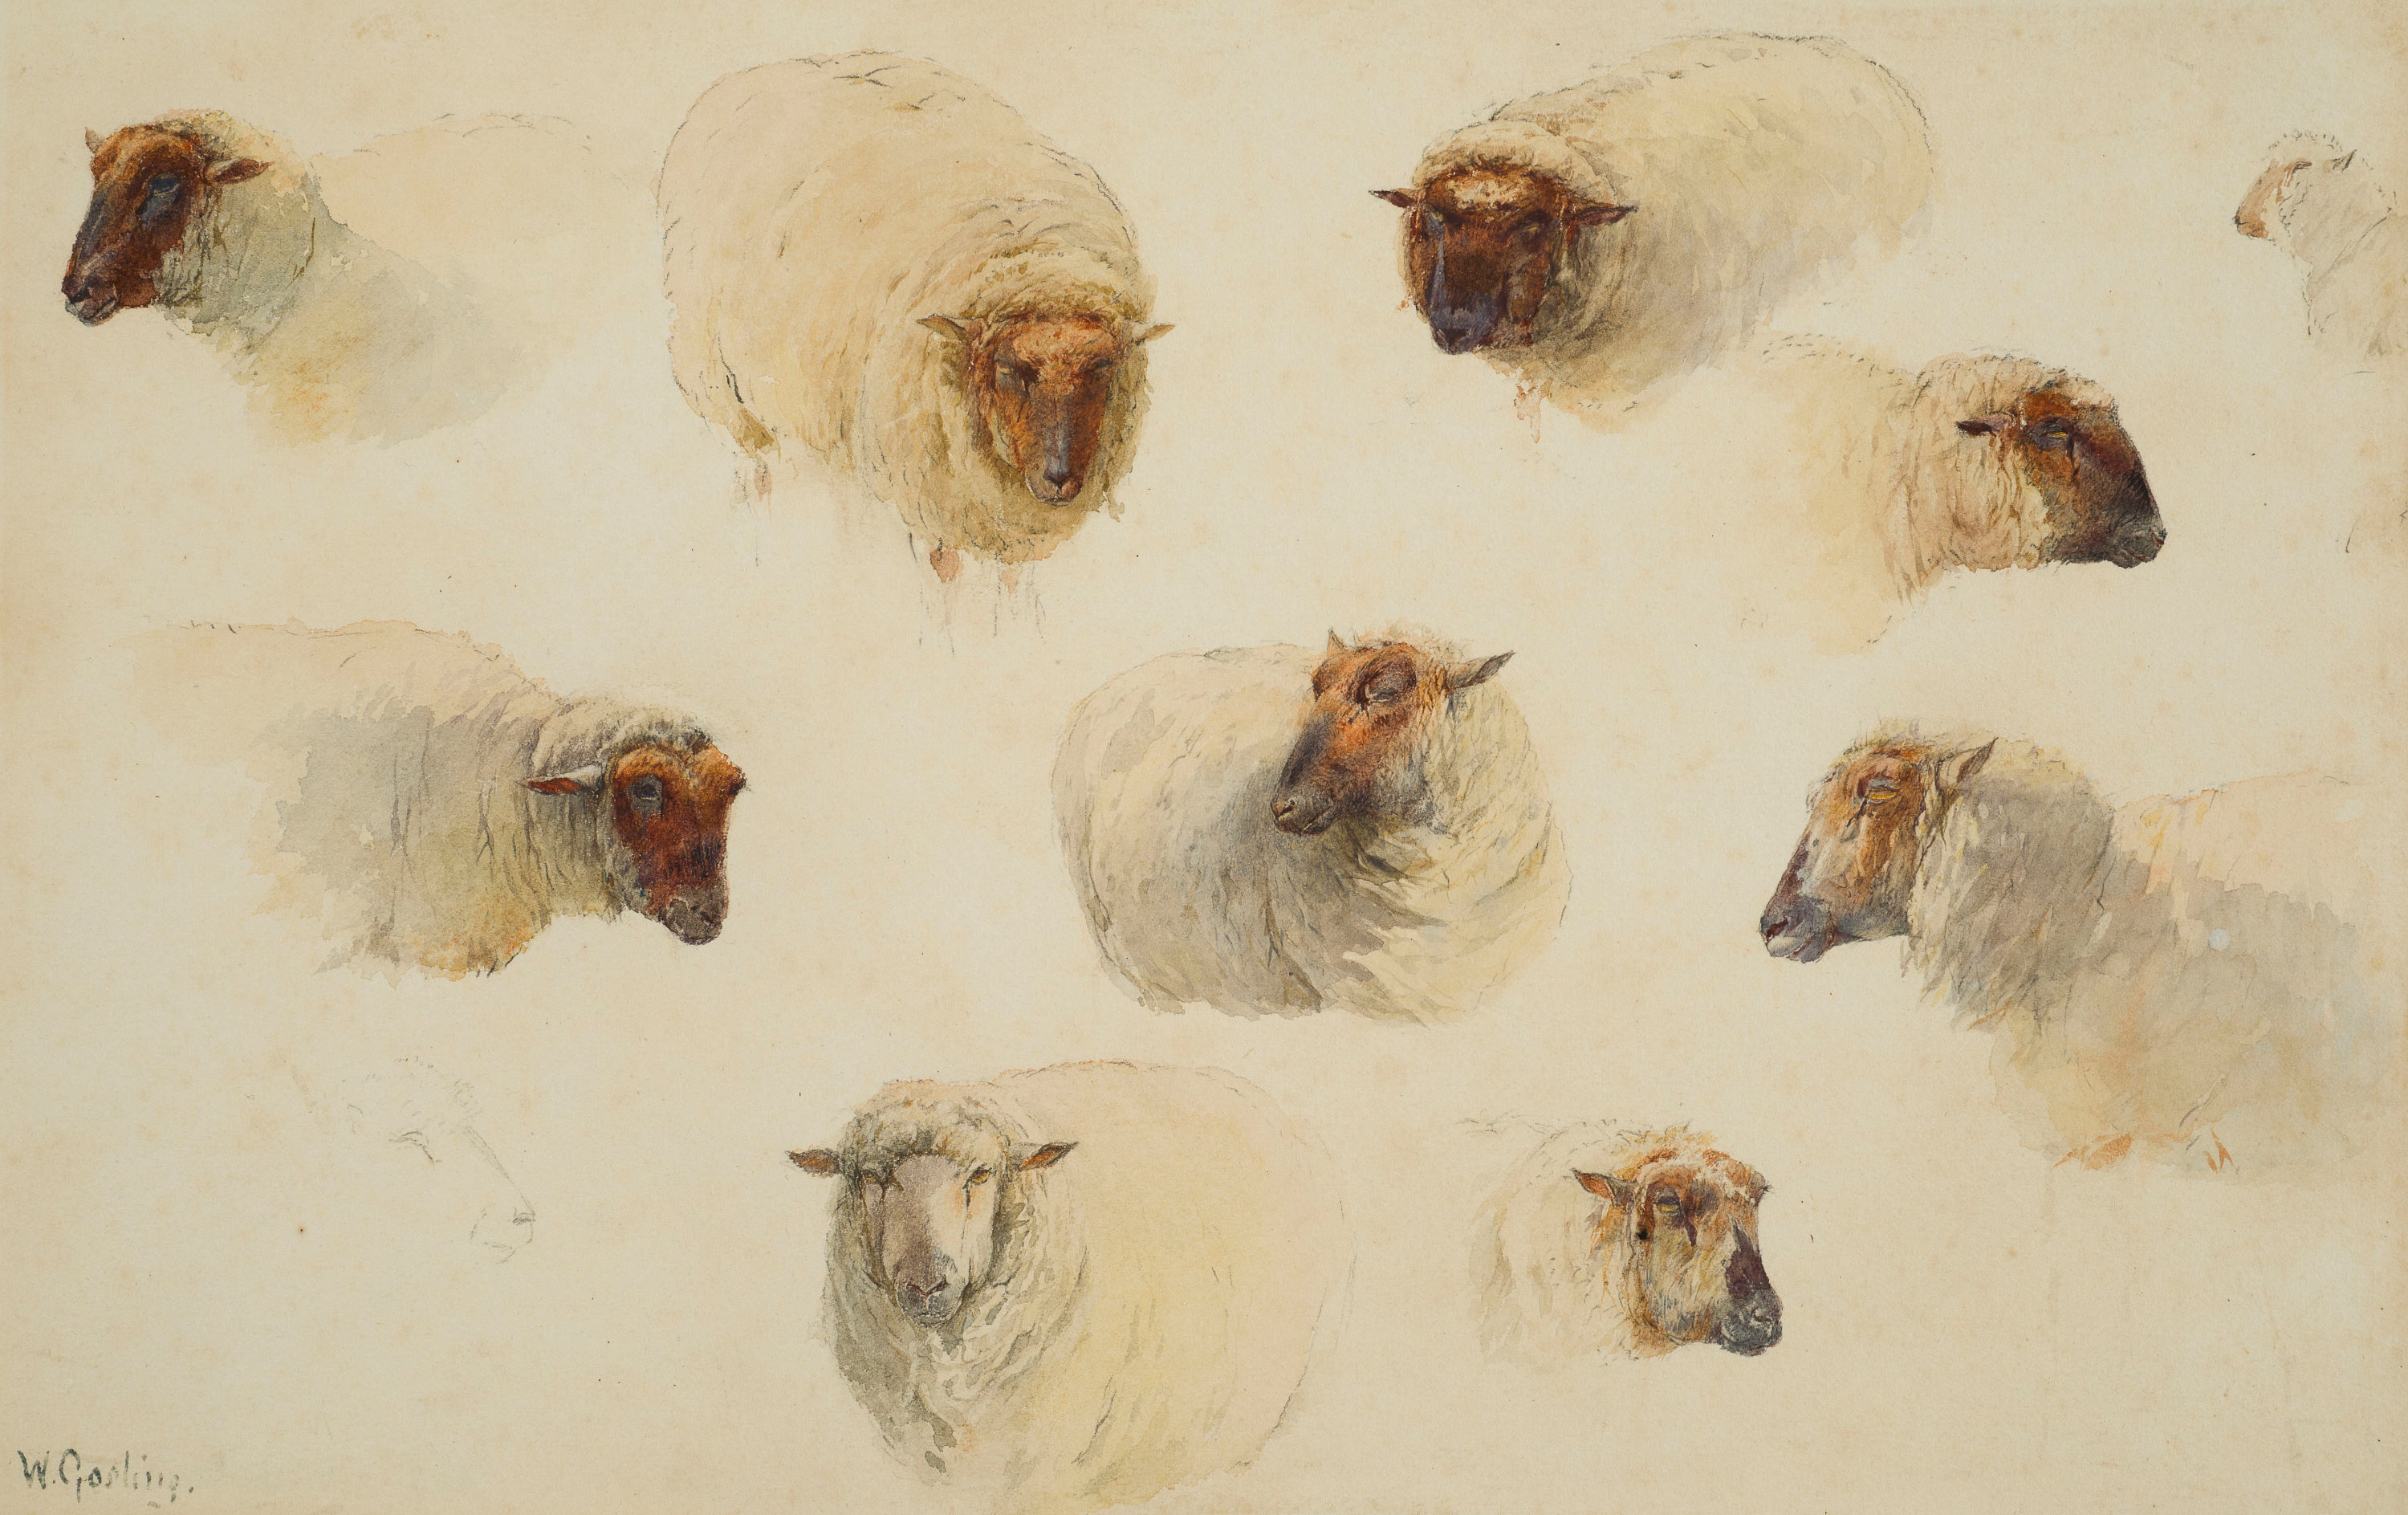 <p><strong>William Gosling</strong><br />
<em>Study of Sheep</em> 1844-1883<br />
Mackelvie Trust Collection, Auckland Art Gallery Toi o Tāmaki<br />
gift of James Tannock Mackelvie, 1884</p>
